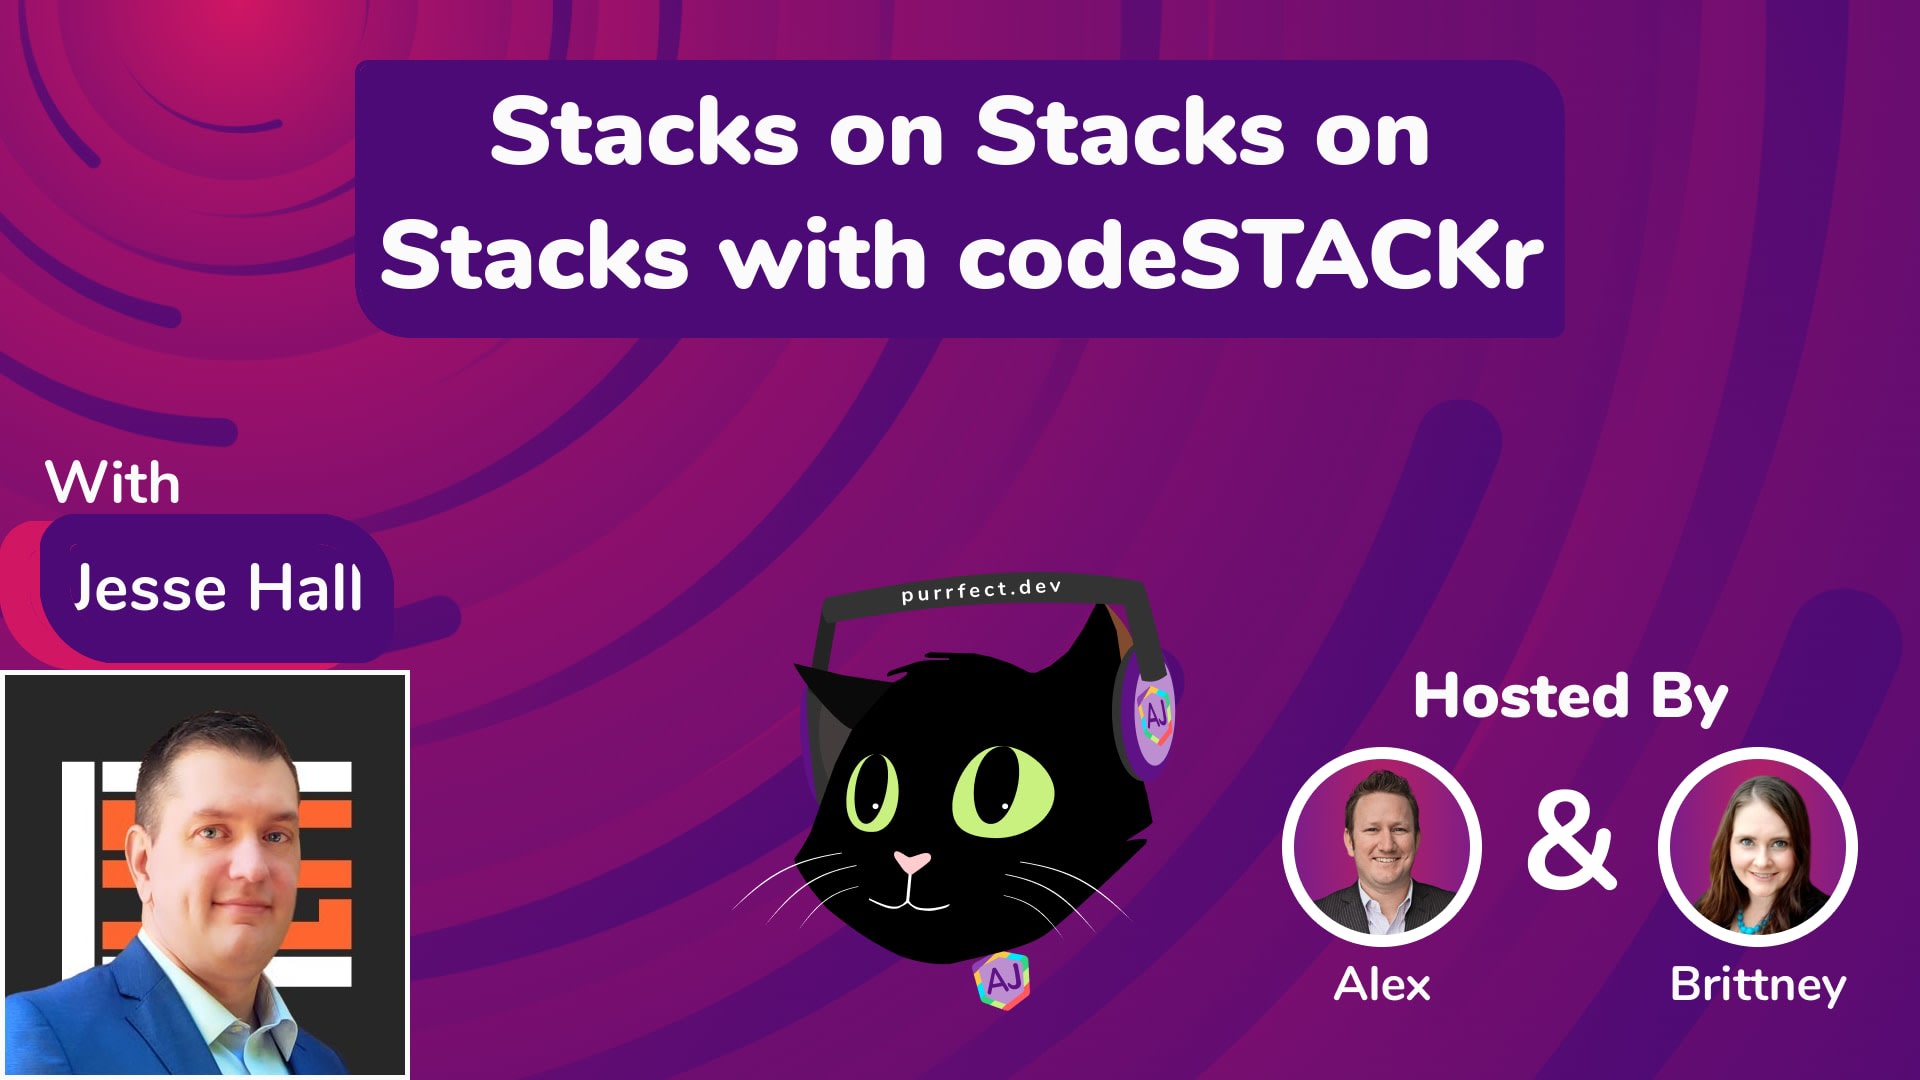 2.15 - Stacks on Stacks on Stacks with codeSTACKr